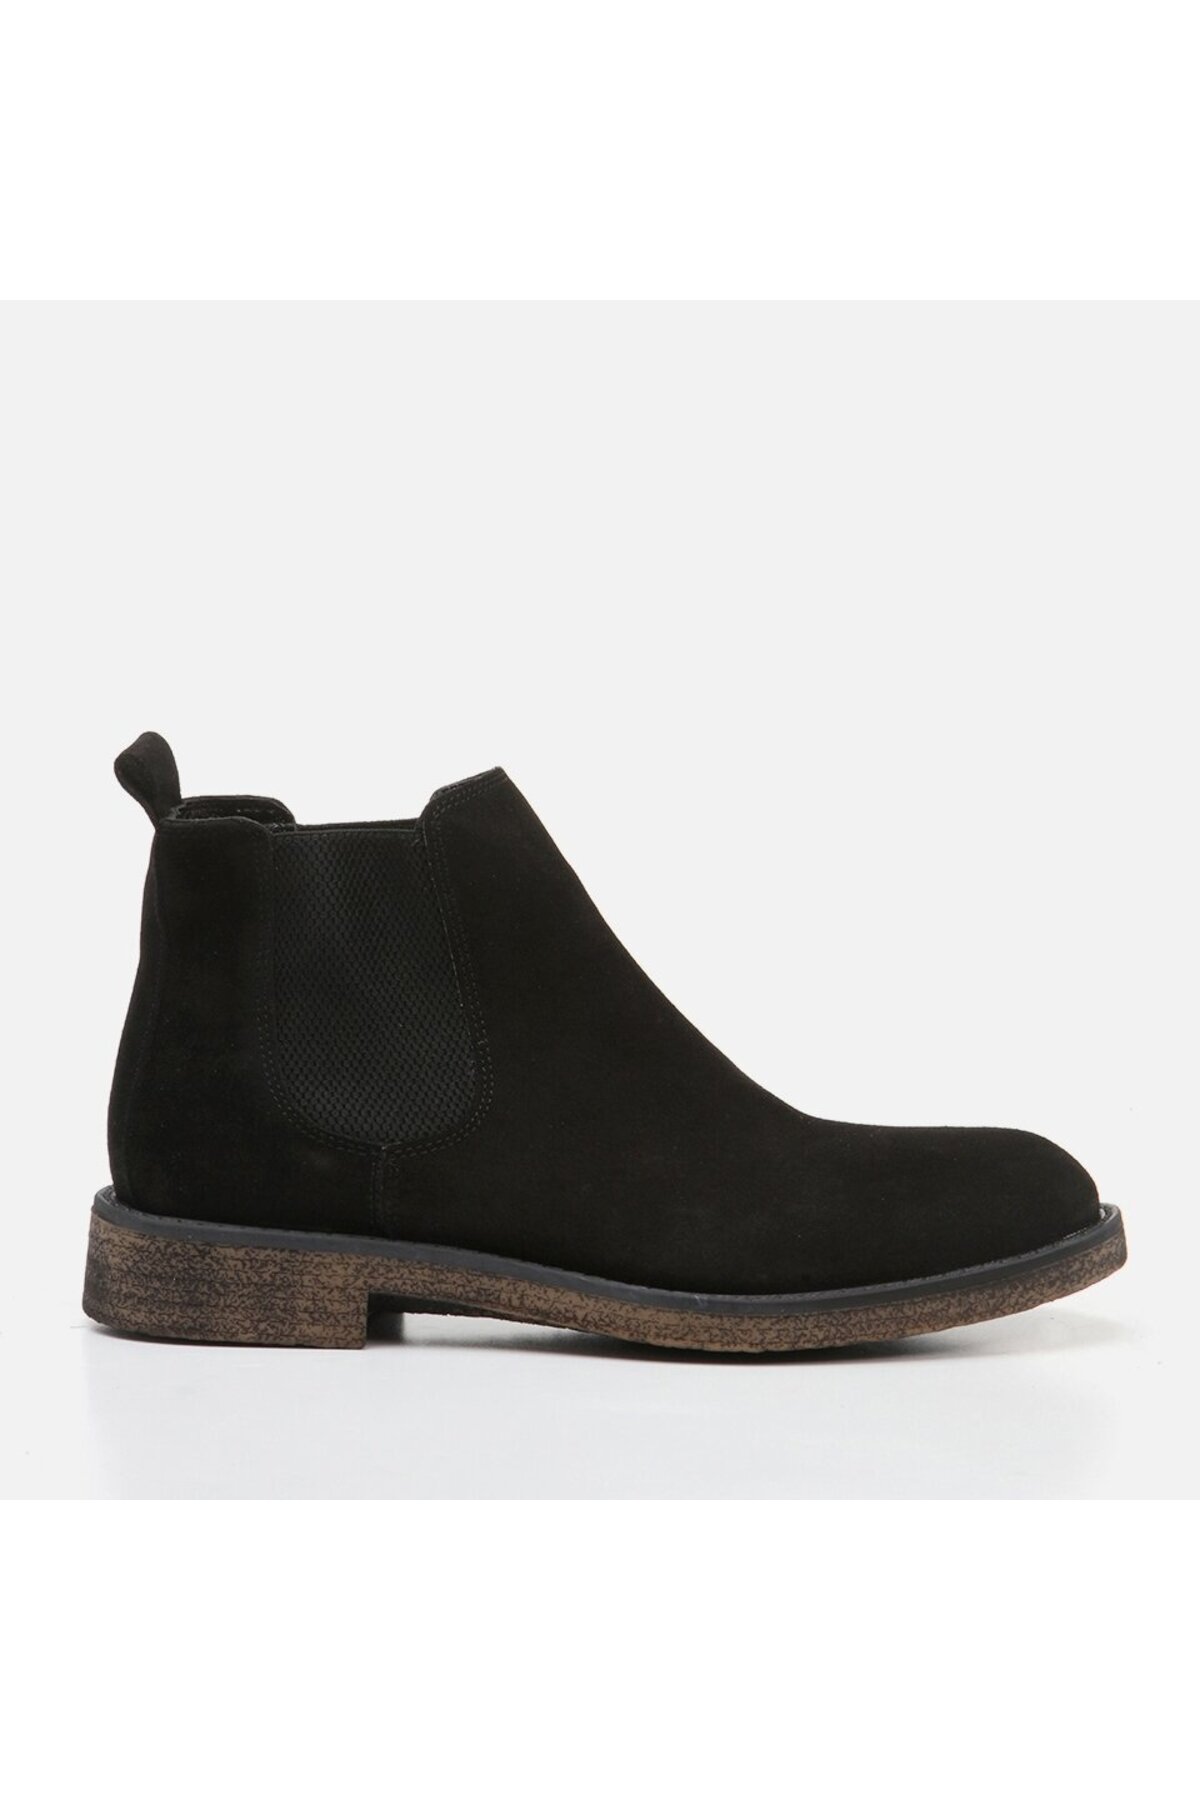 Hotiç Genuine Leather Black Men's Casual Boots